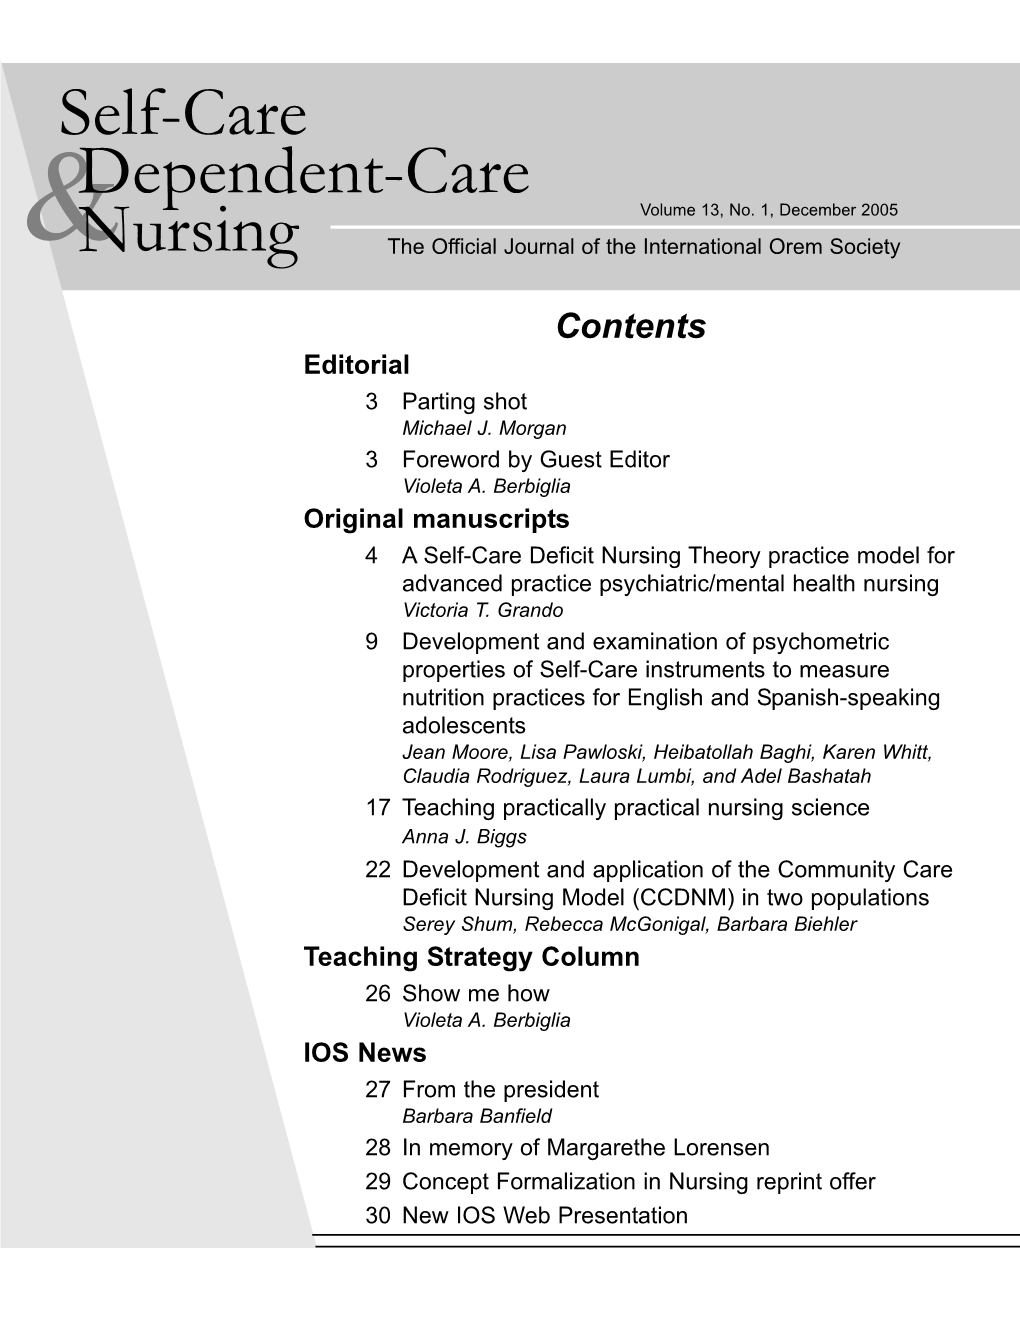 Self-Care Dependent-Care Volume 13, No